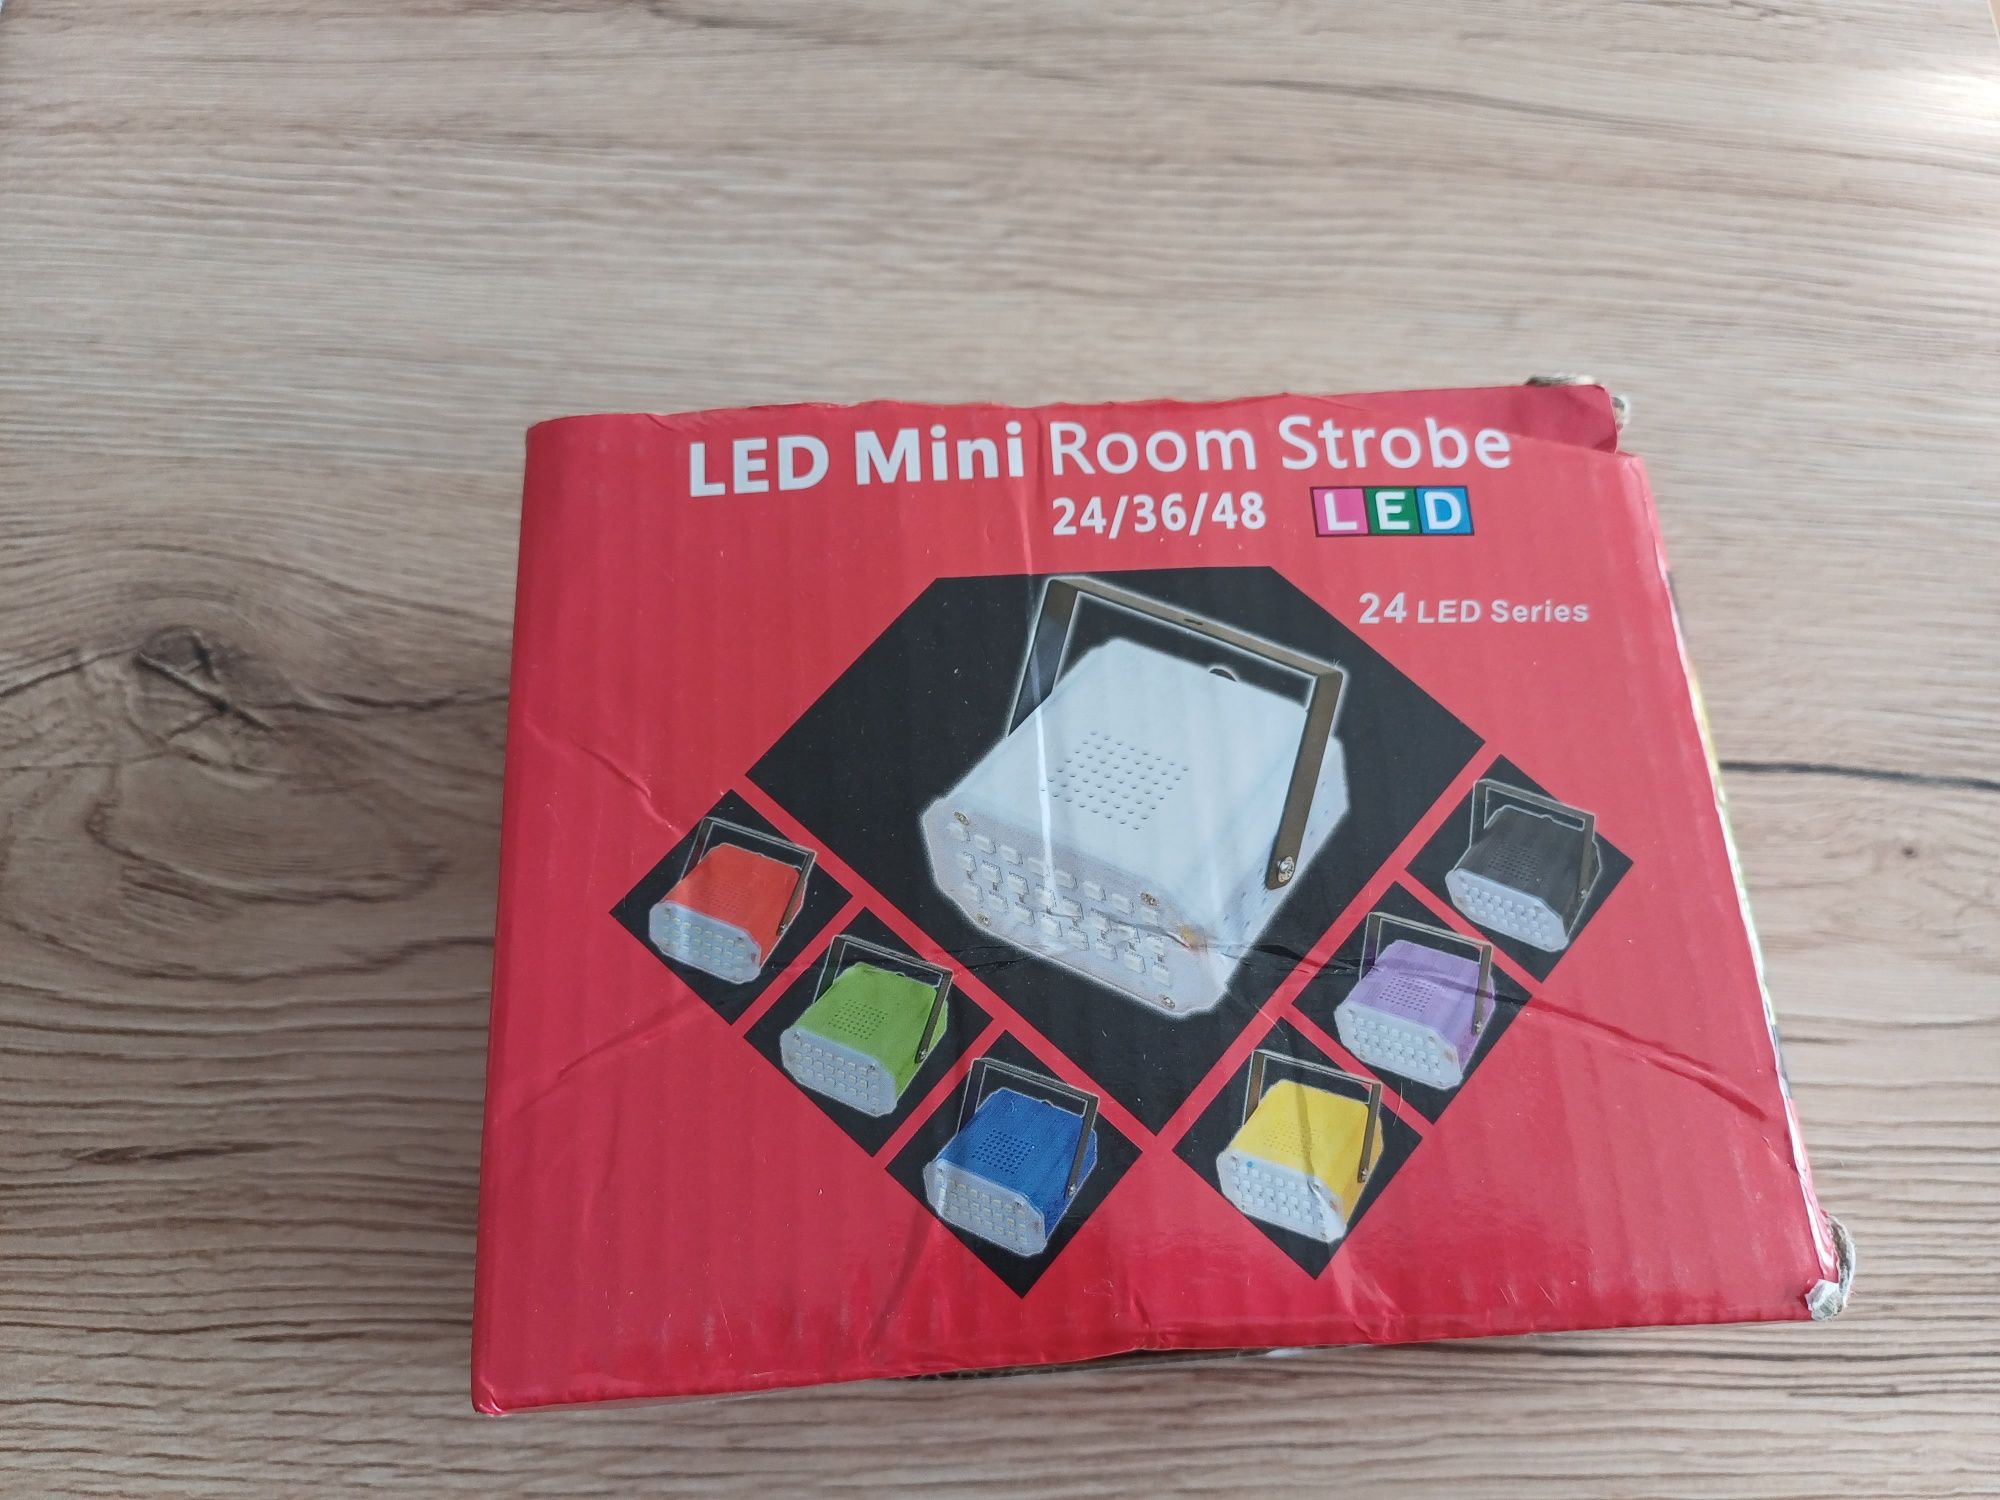 LED Mini Room Strobe